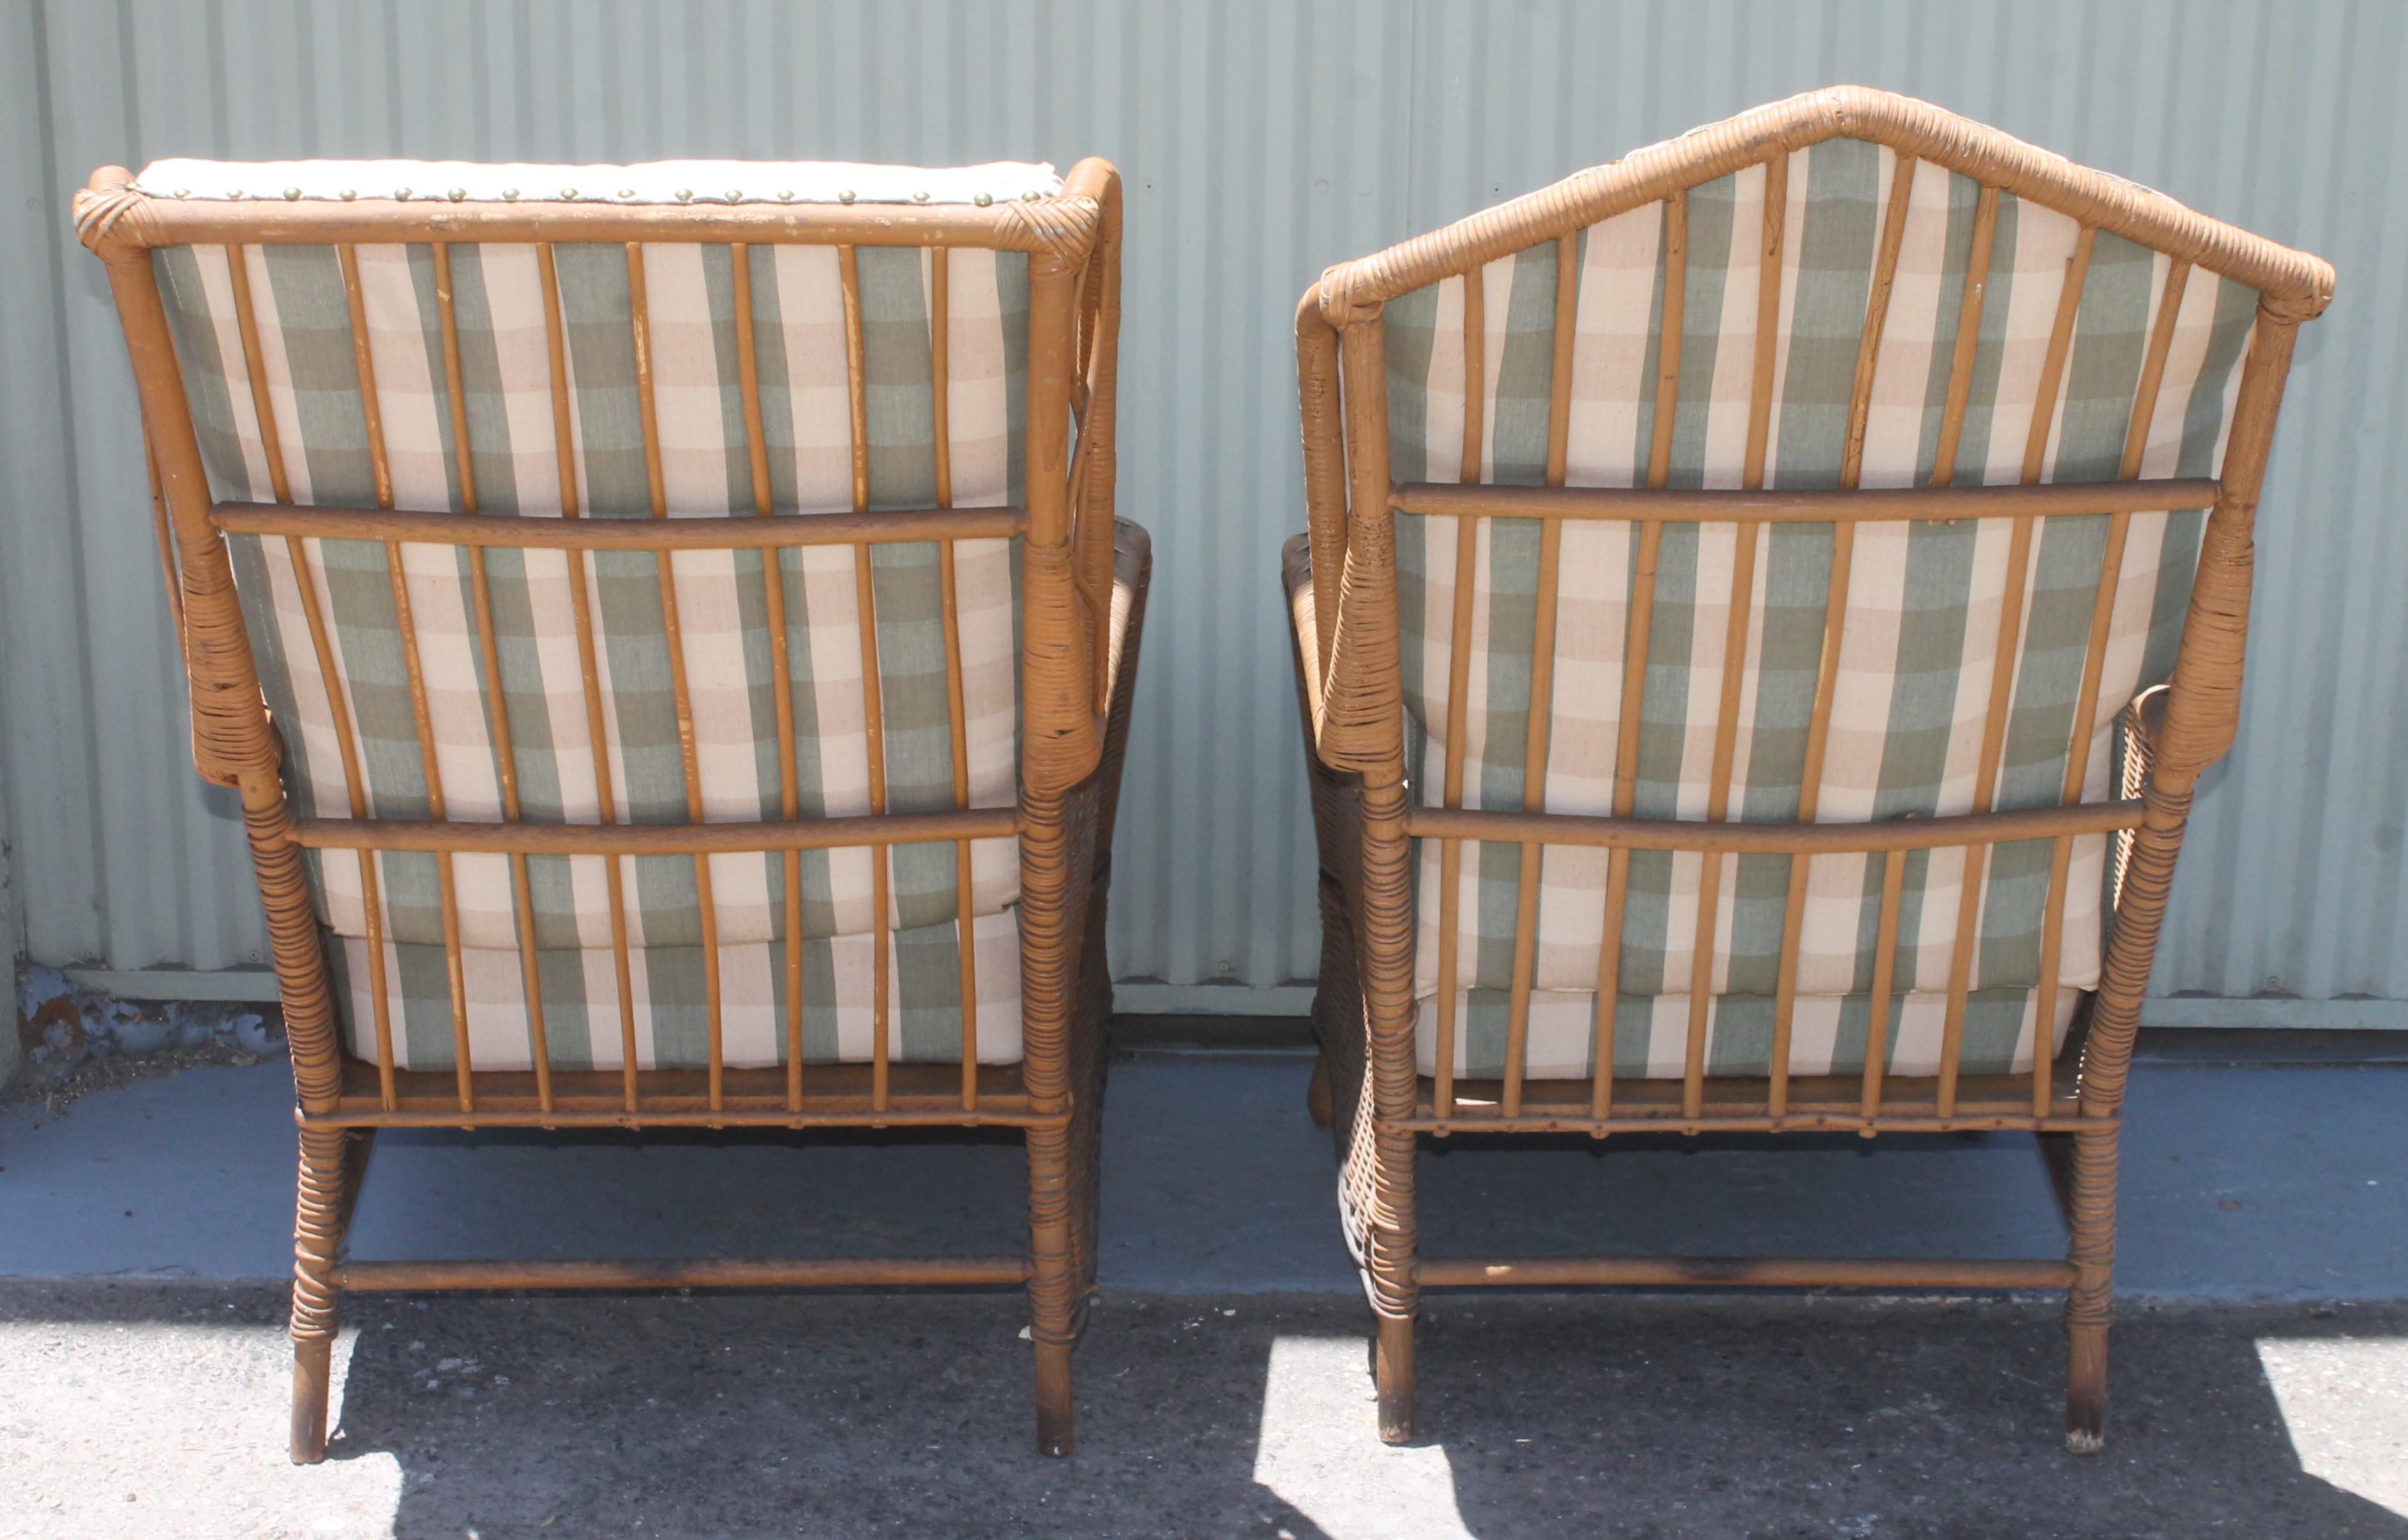 Adirondack Bar Harbor Wicker Chairs in Original Paint, Pair